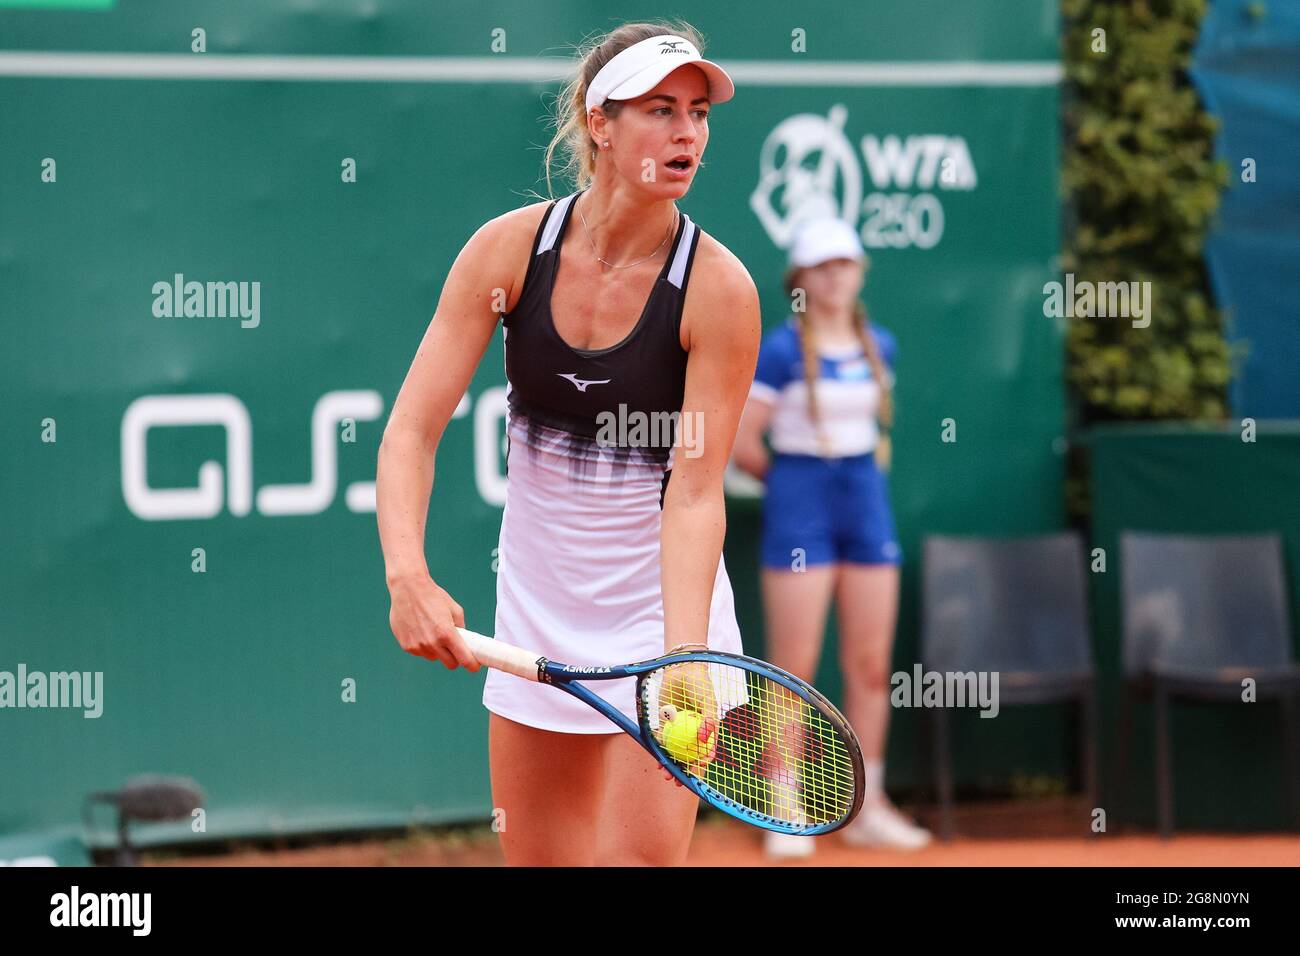 Anna Bondar (HUNGARY) plays against Anna Karolina Schmiedlova (SLOVAKIA) during the BNP Paribas Poland Open Tournament (WTA 250 category) in Gdynia